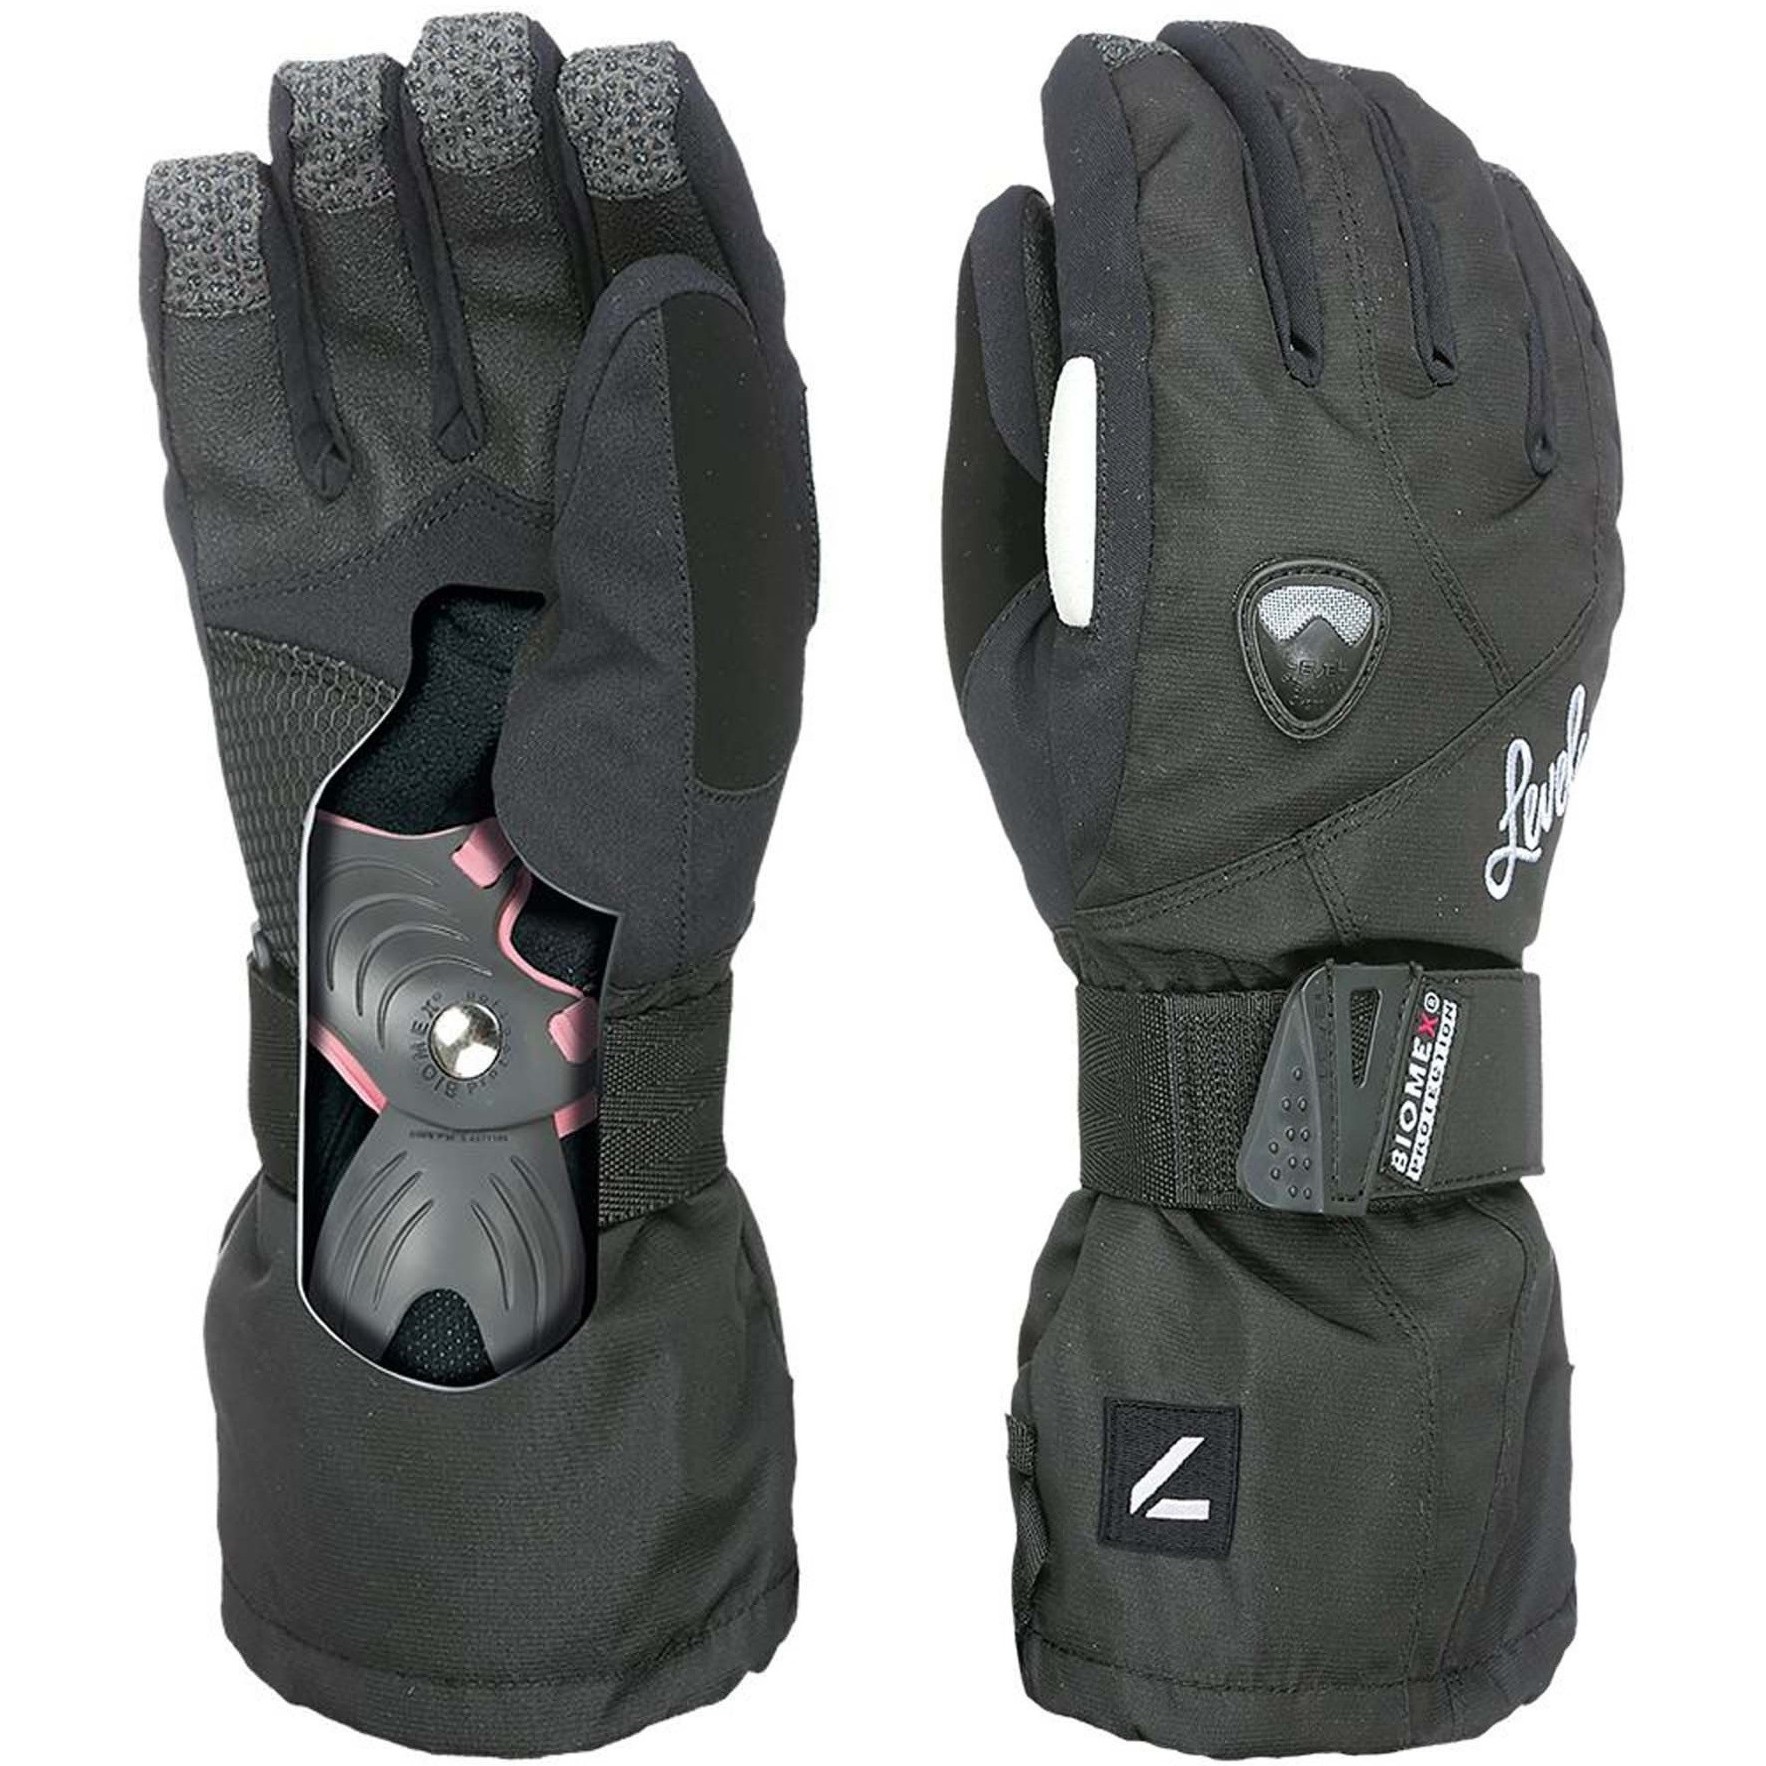 Level Butterfly Glove Women's Ski/Snowboard Gloves